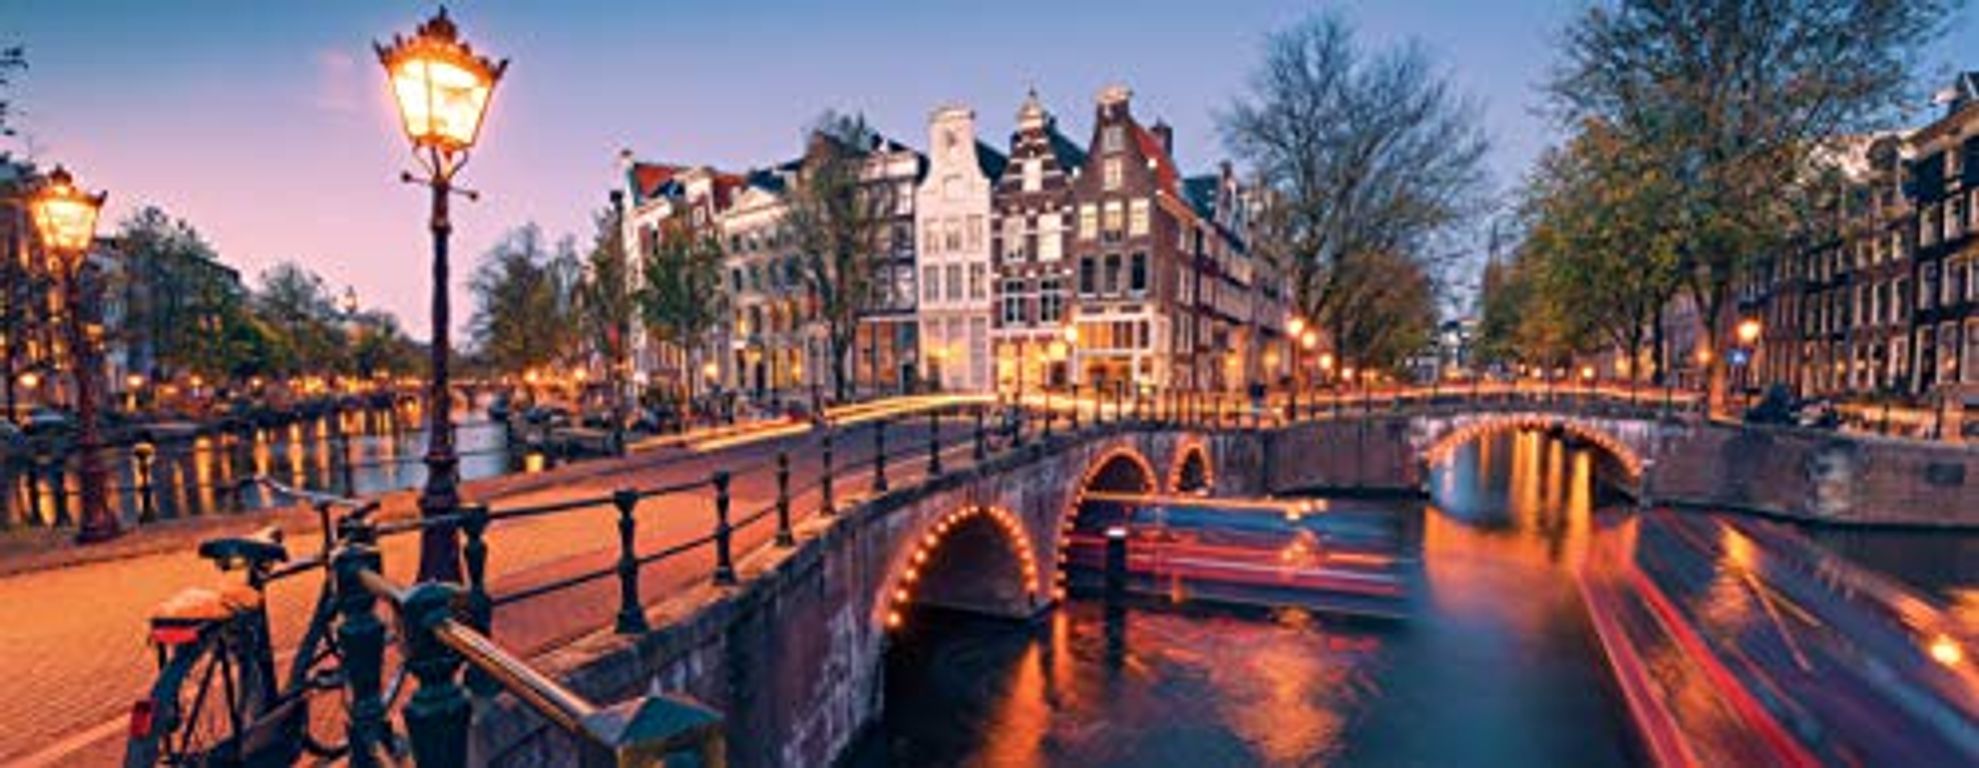 Soirée à Amsterdam